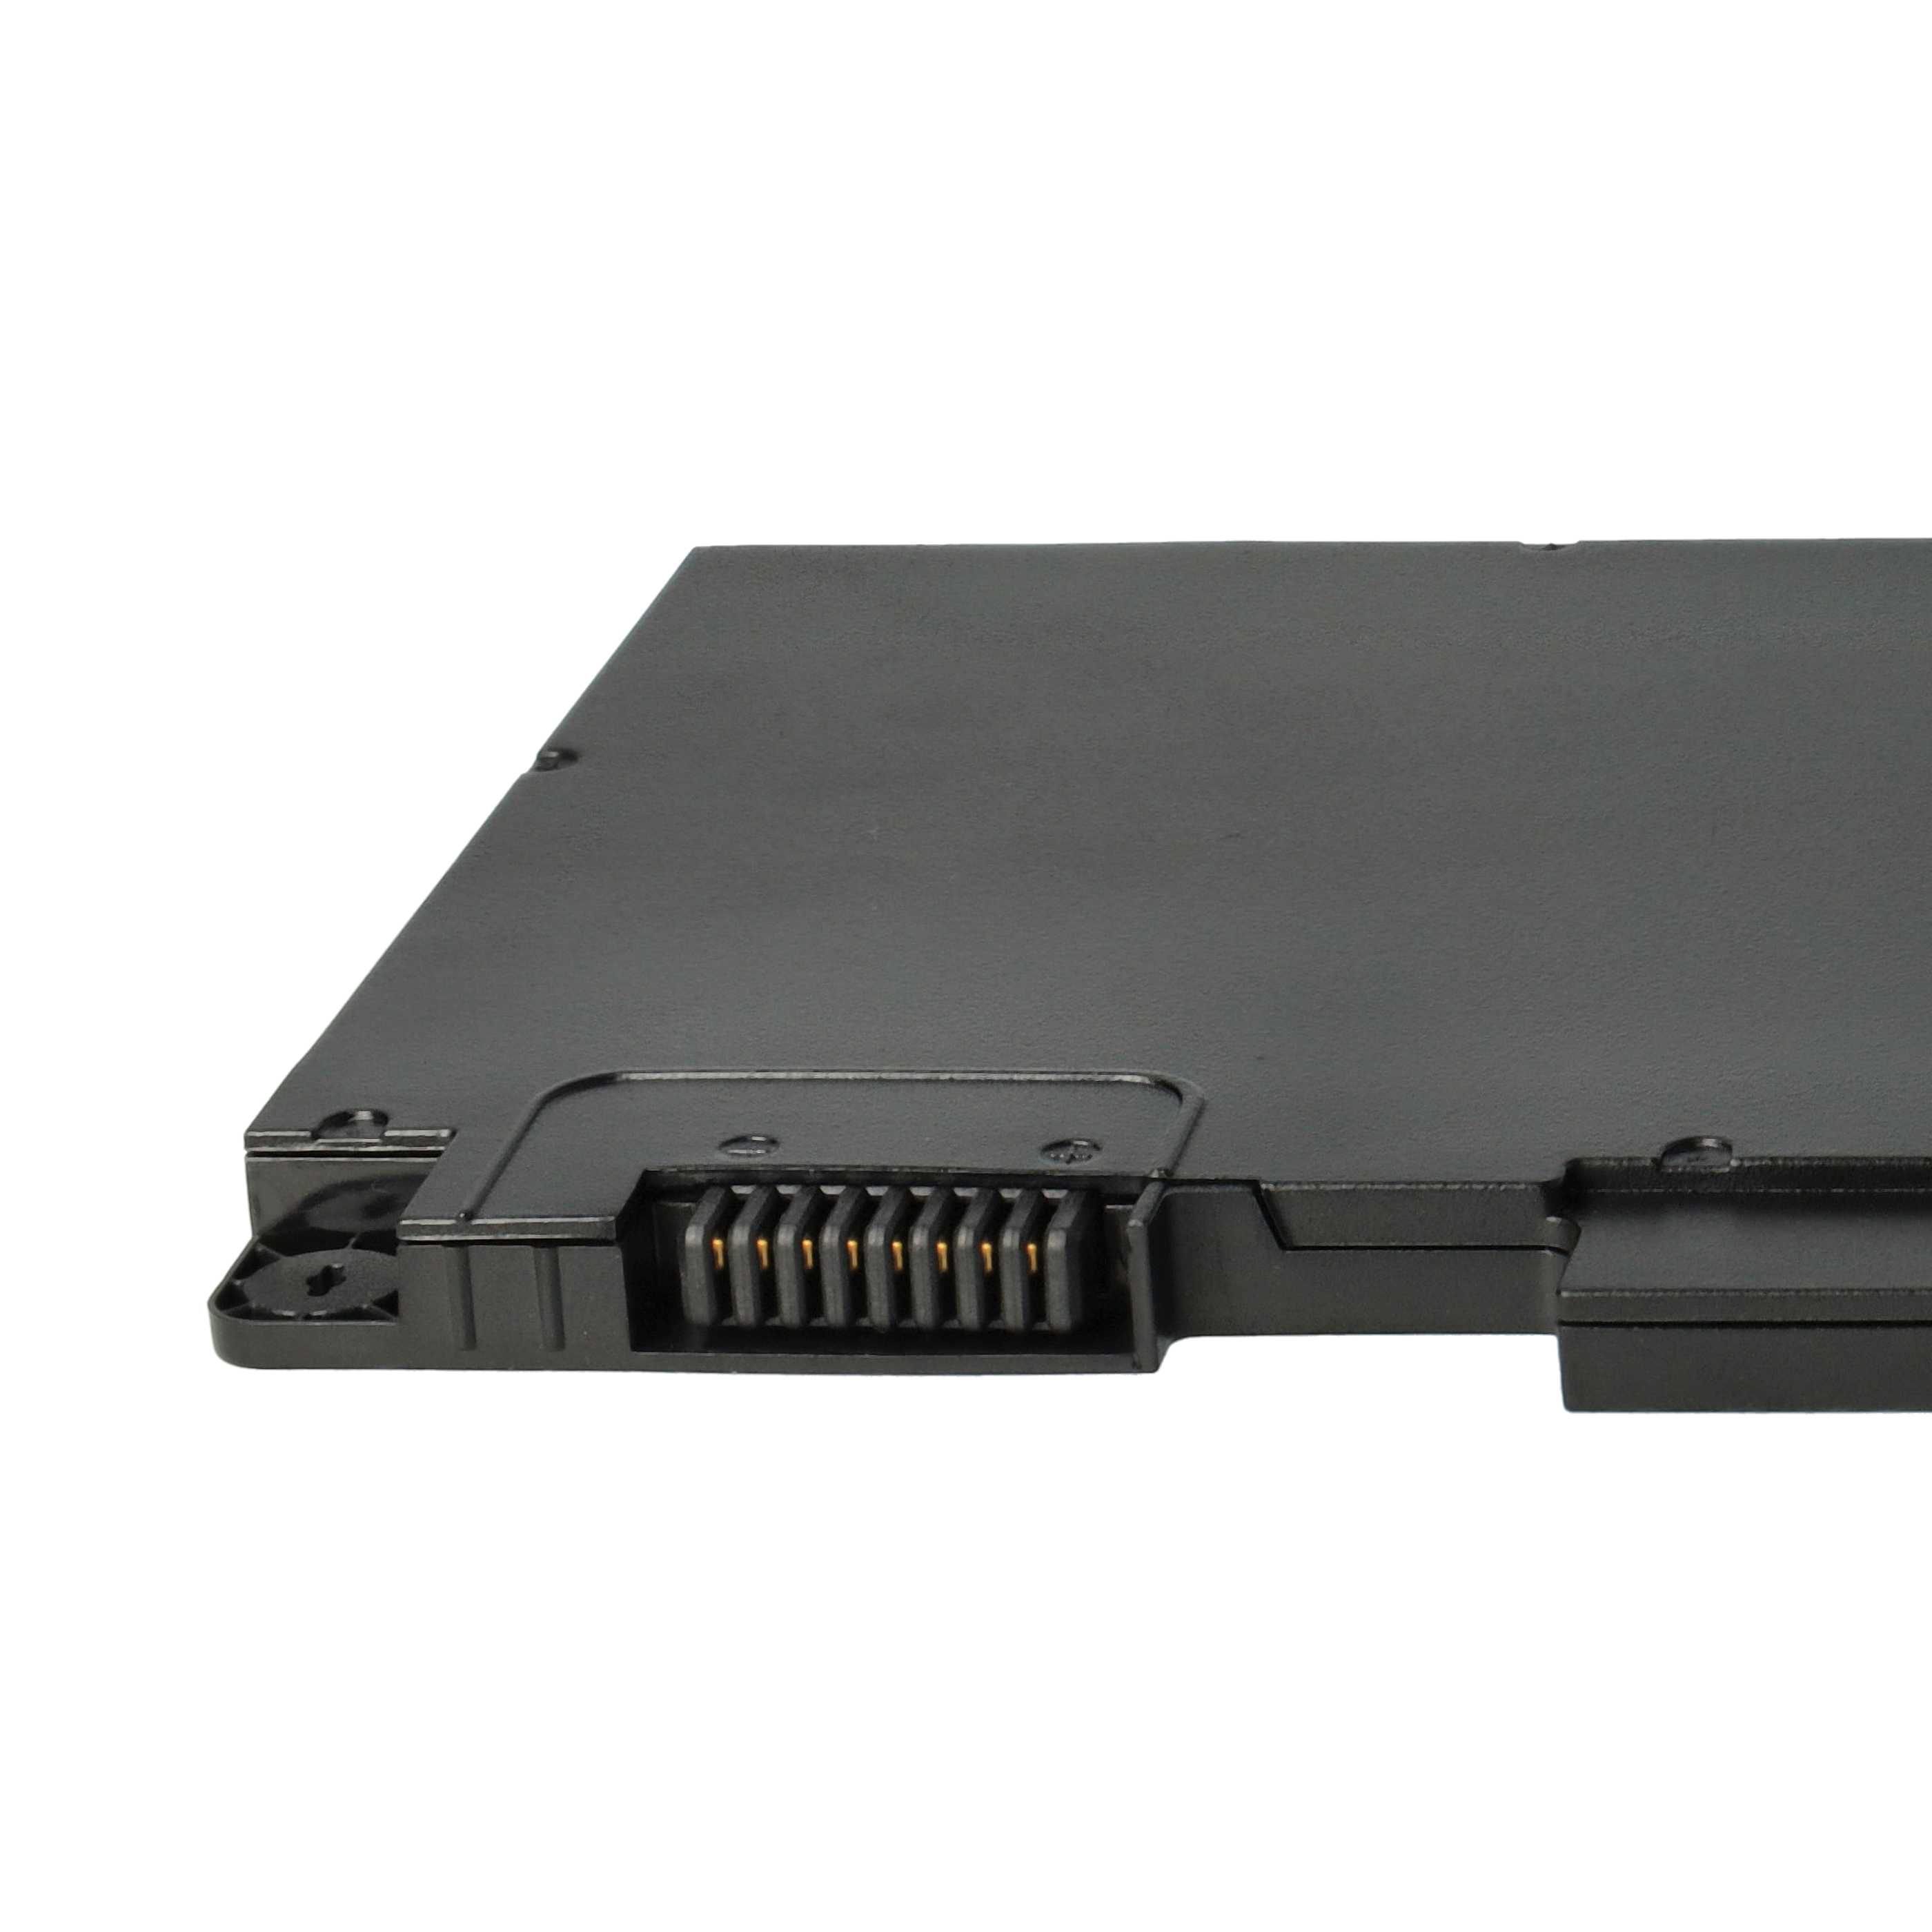 Akumulator do laptopa zamiennik HP 854047-141, 800513-001, 800231-141 - 4000 mAh 11,4 V LiPo, czarny